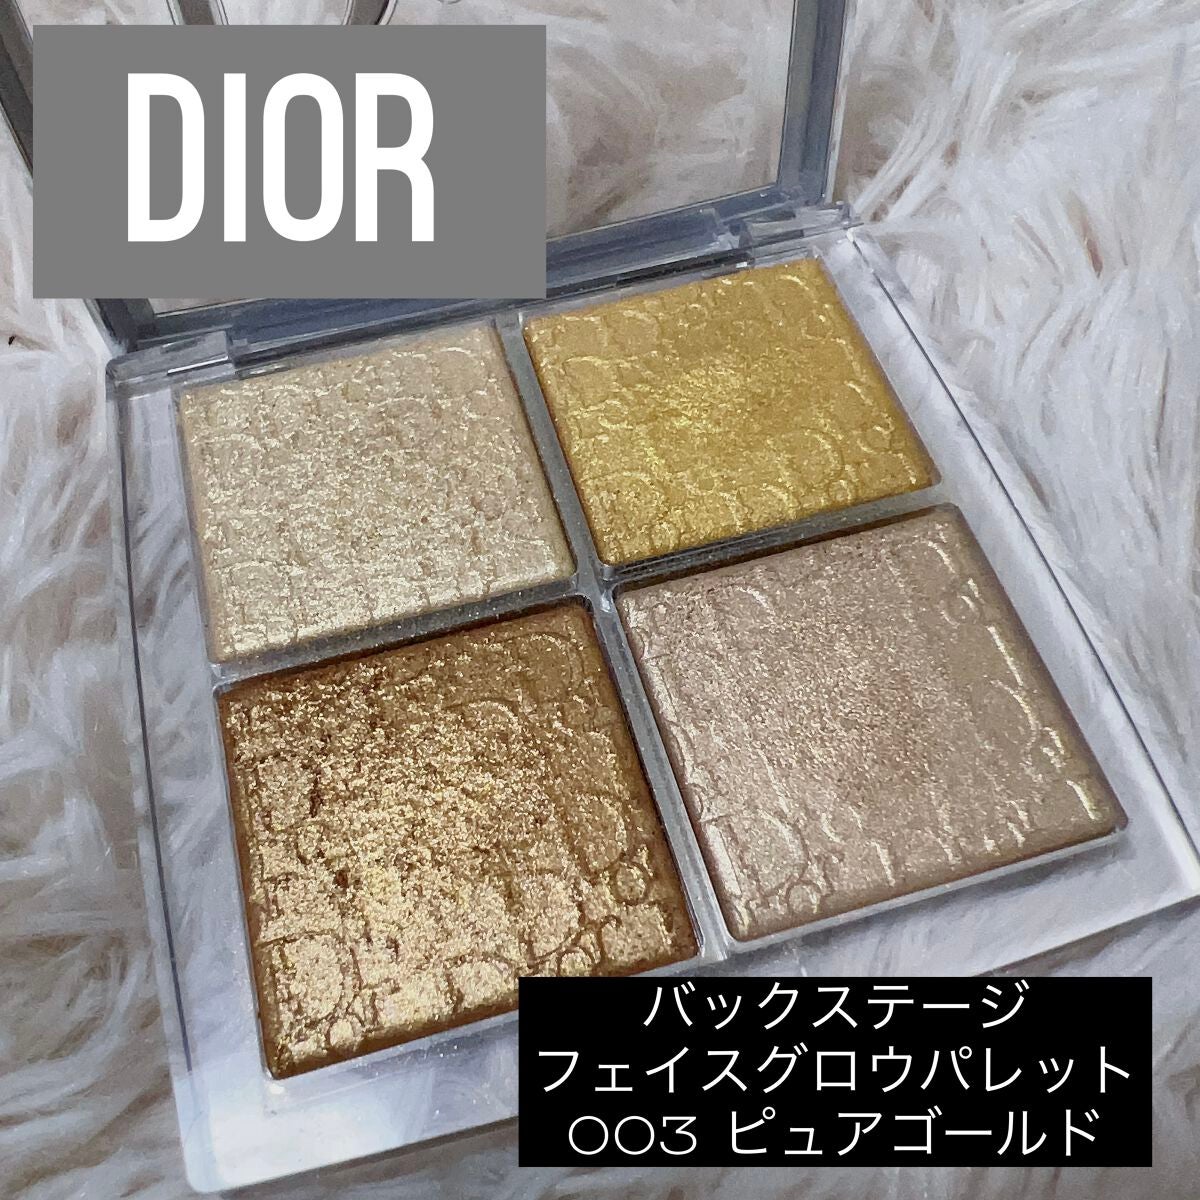 Dior バックステージ グロウフェイスパレット 003